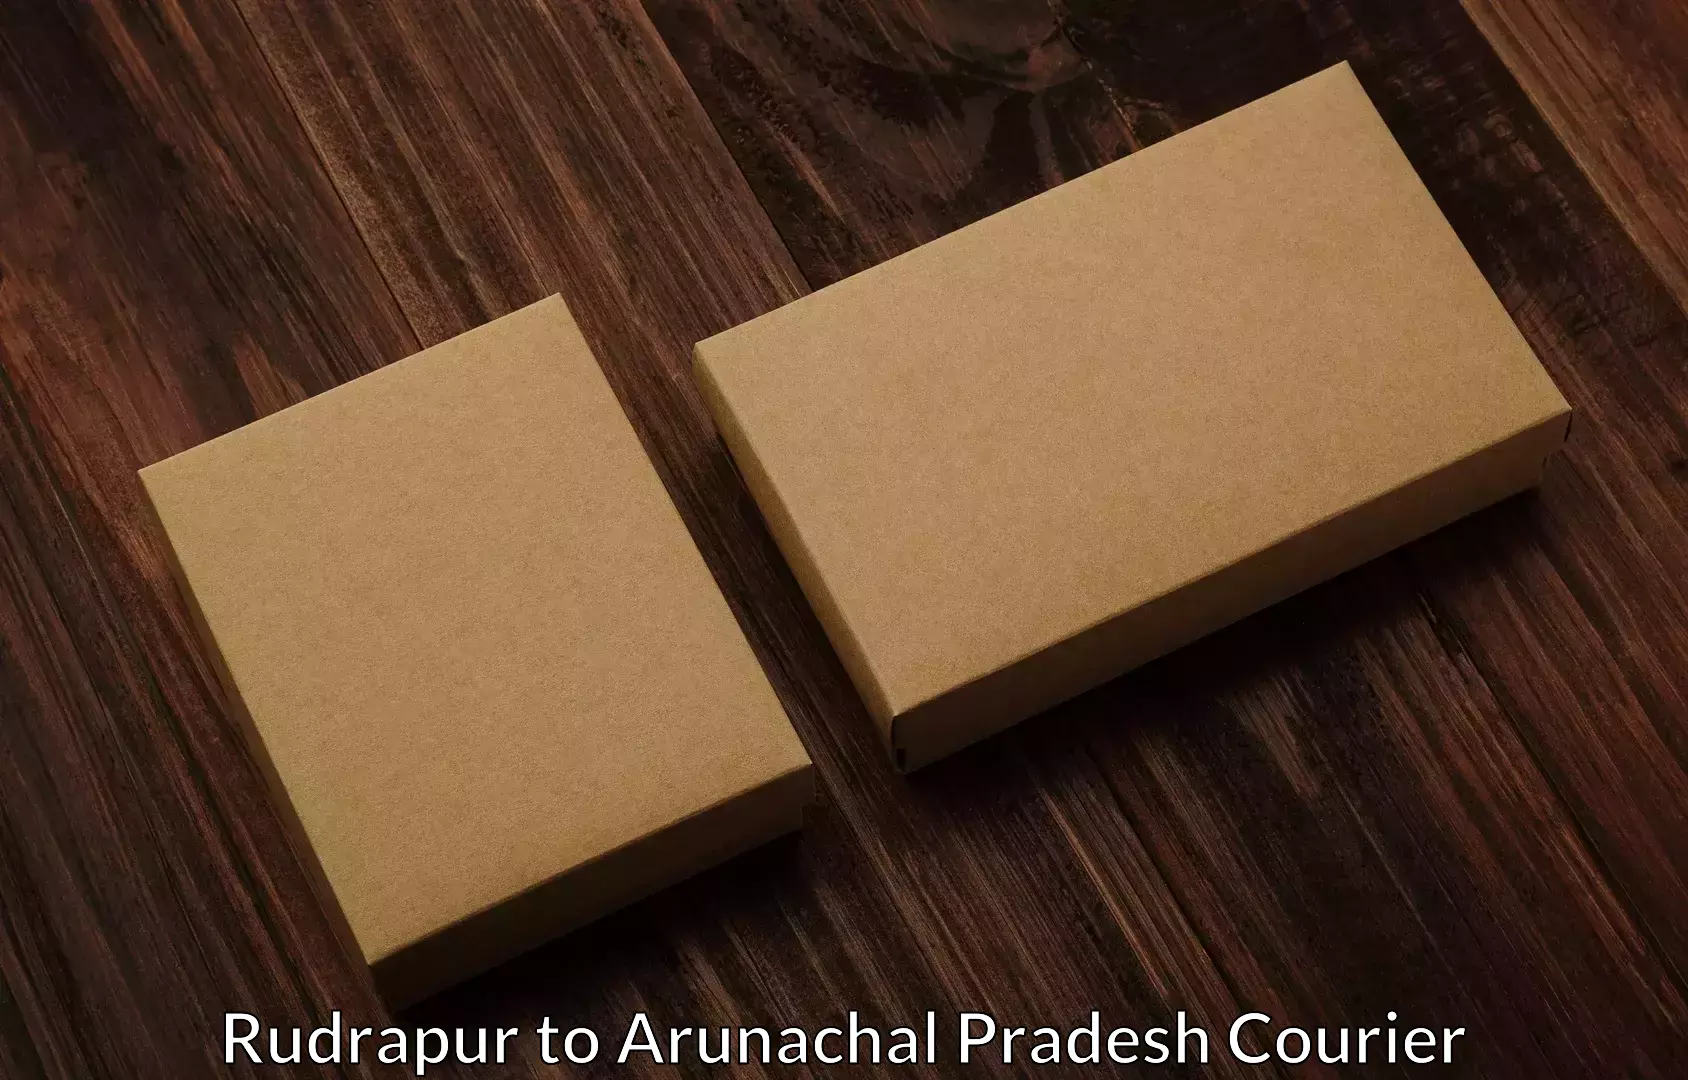 Efficient moving company Rudrapur to Lower Subansiri